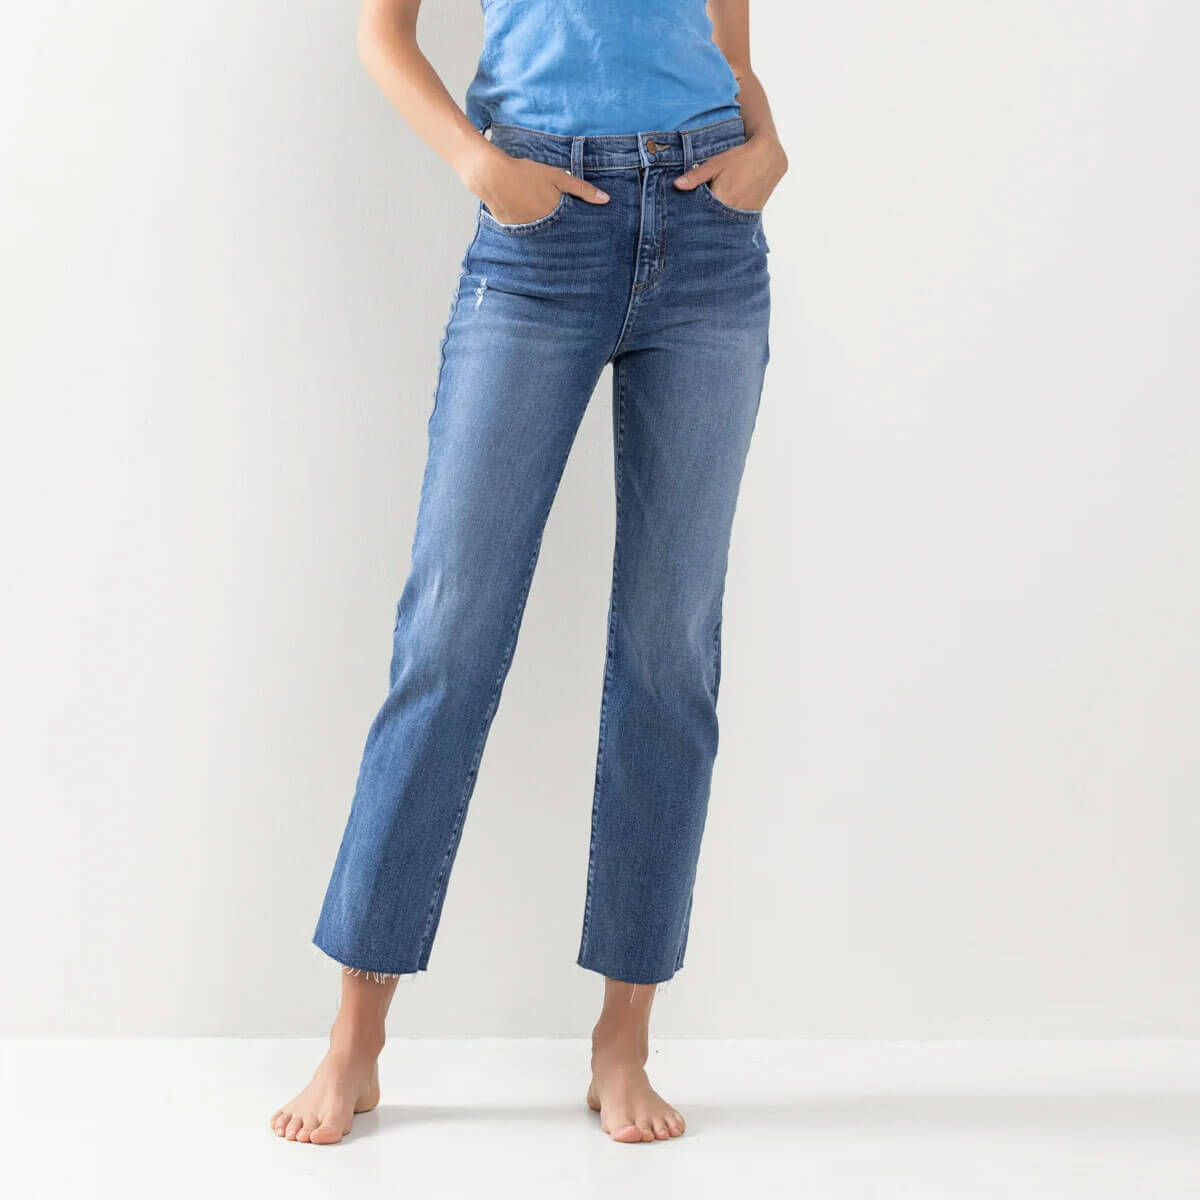 Lucky Brand Women's Charlie Skinny White Oak Cone Denim Jeans Size 8  Regular - $41 - From Brian